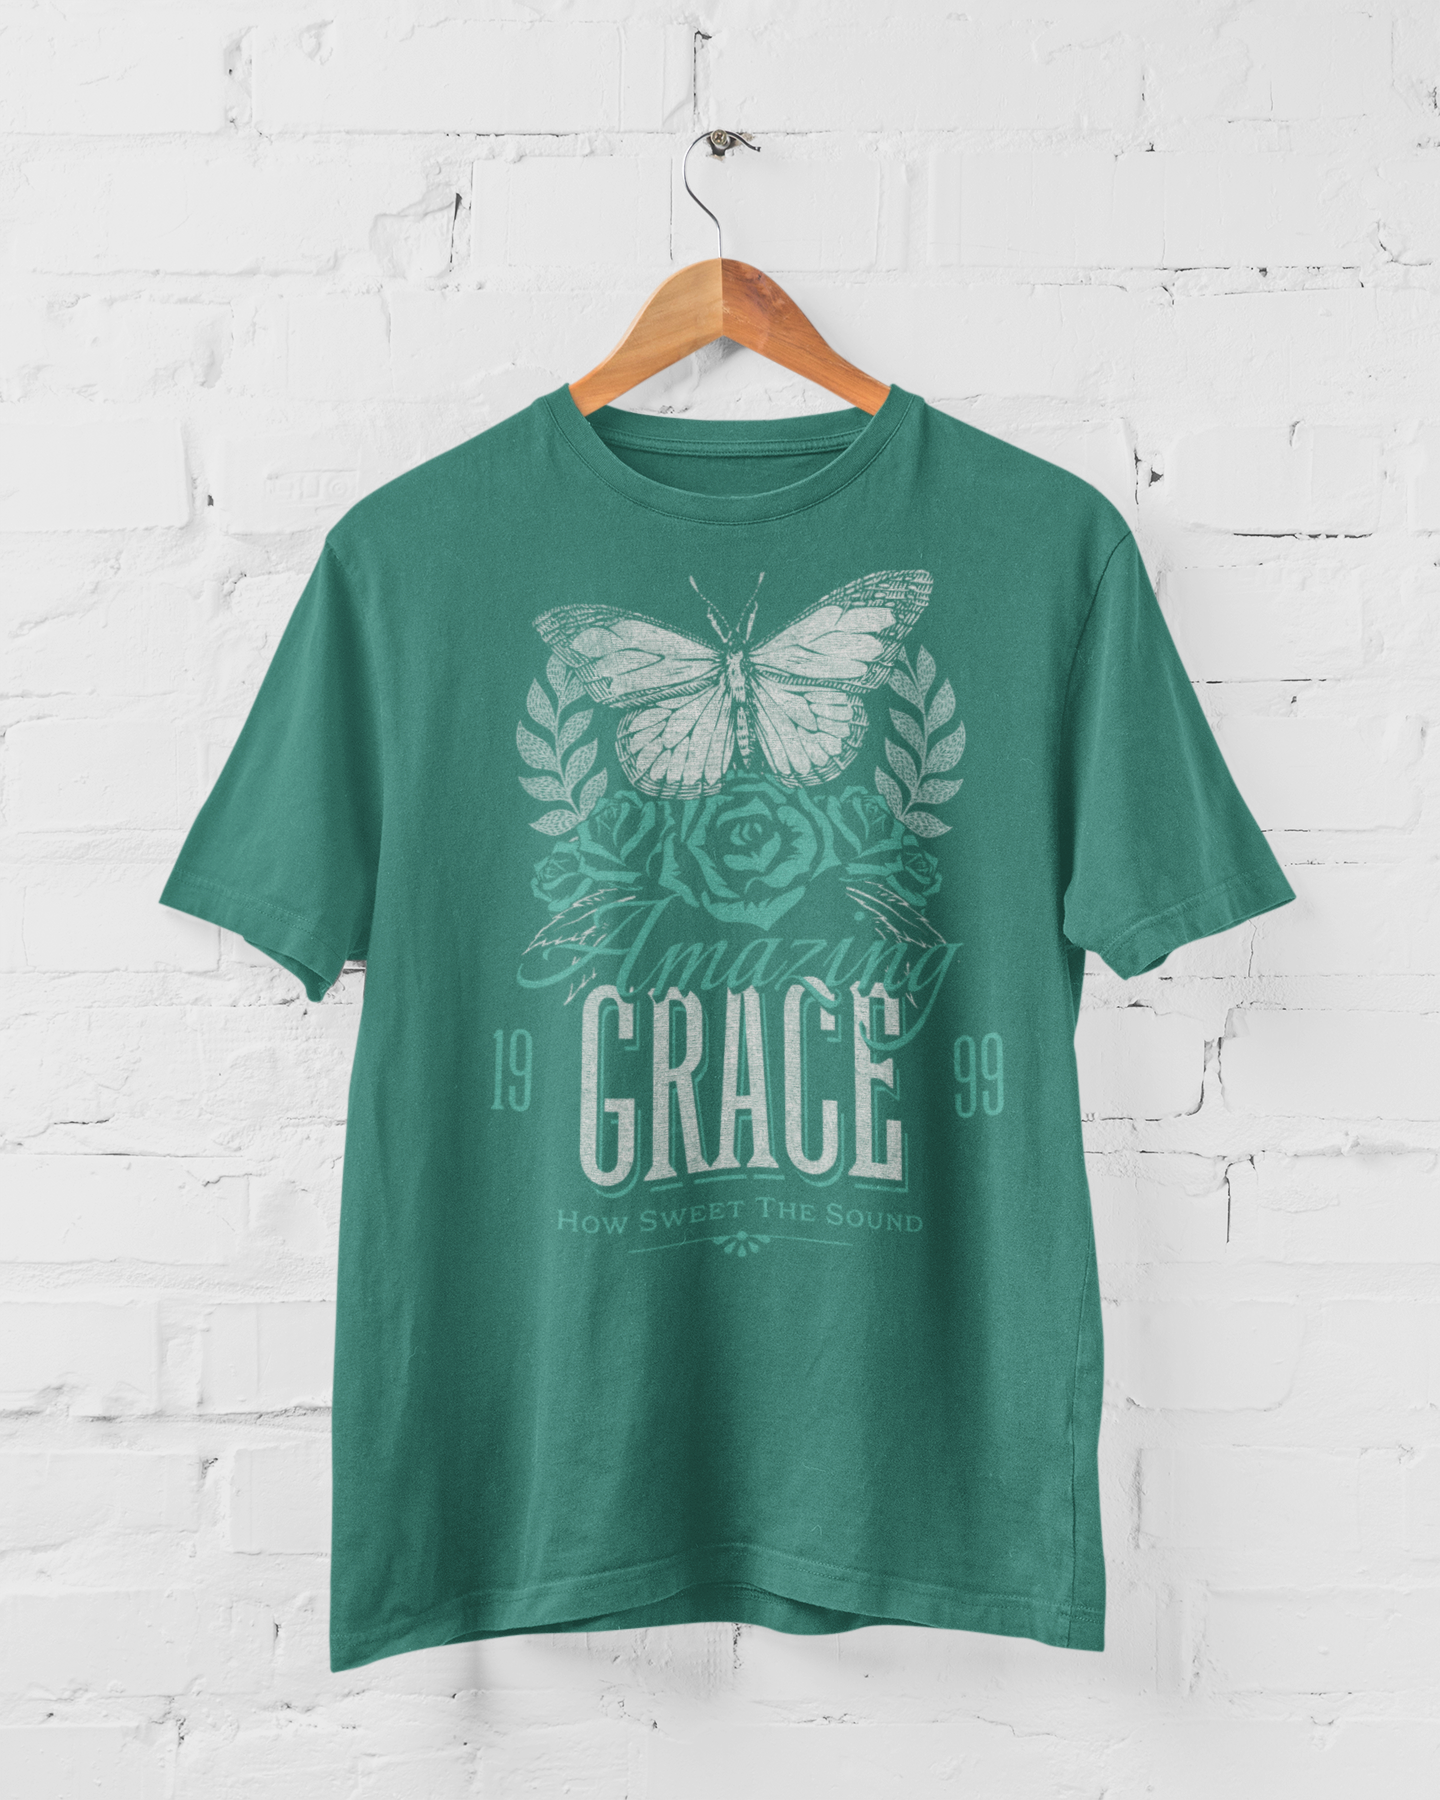 Amazing Grace Vintage tee